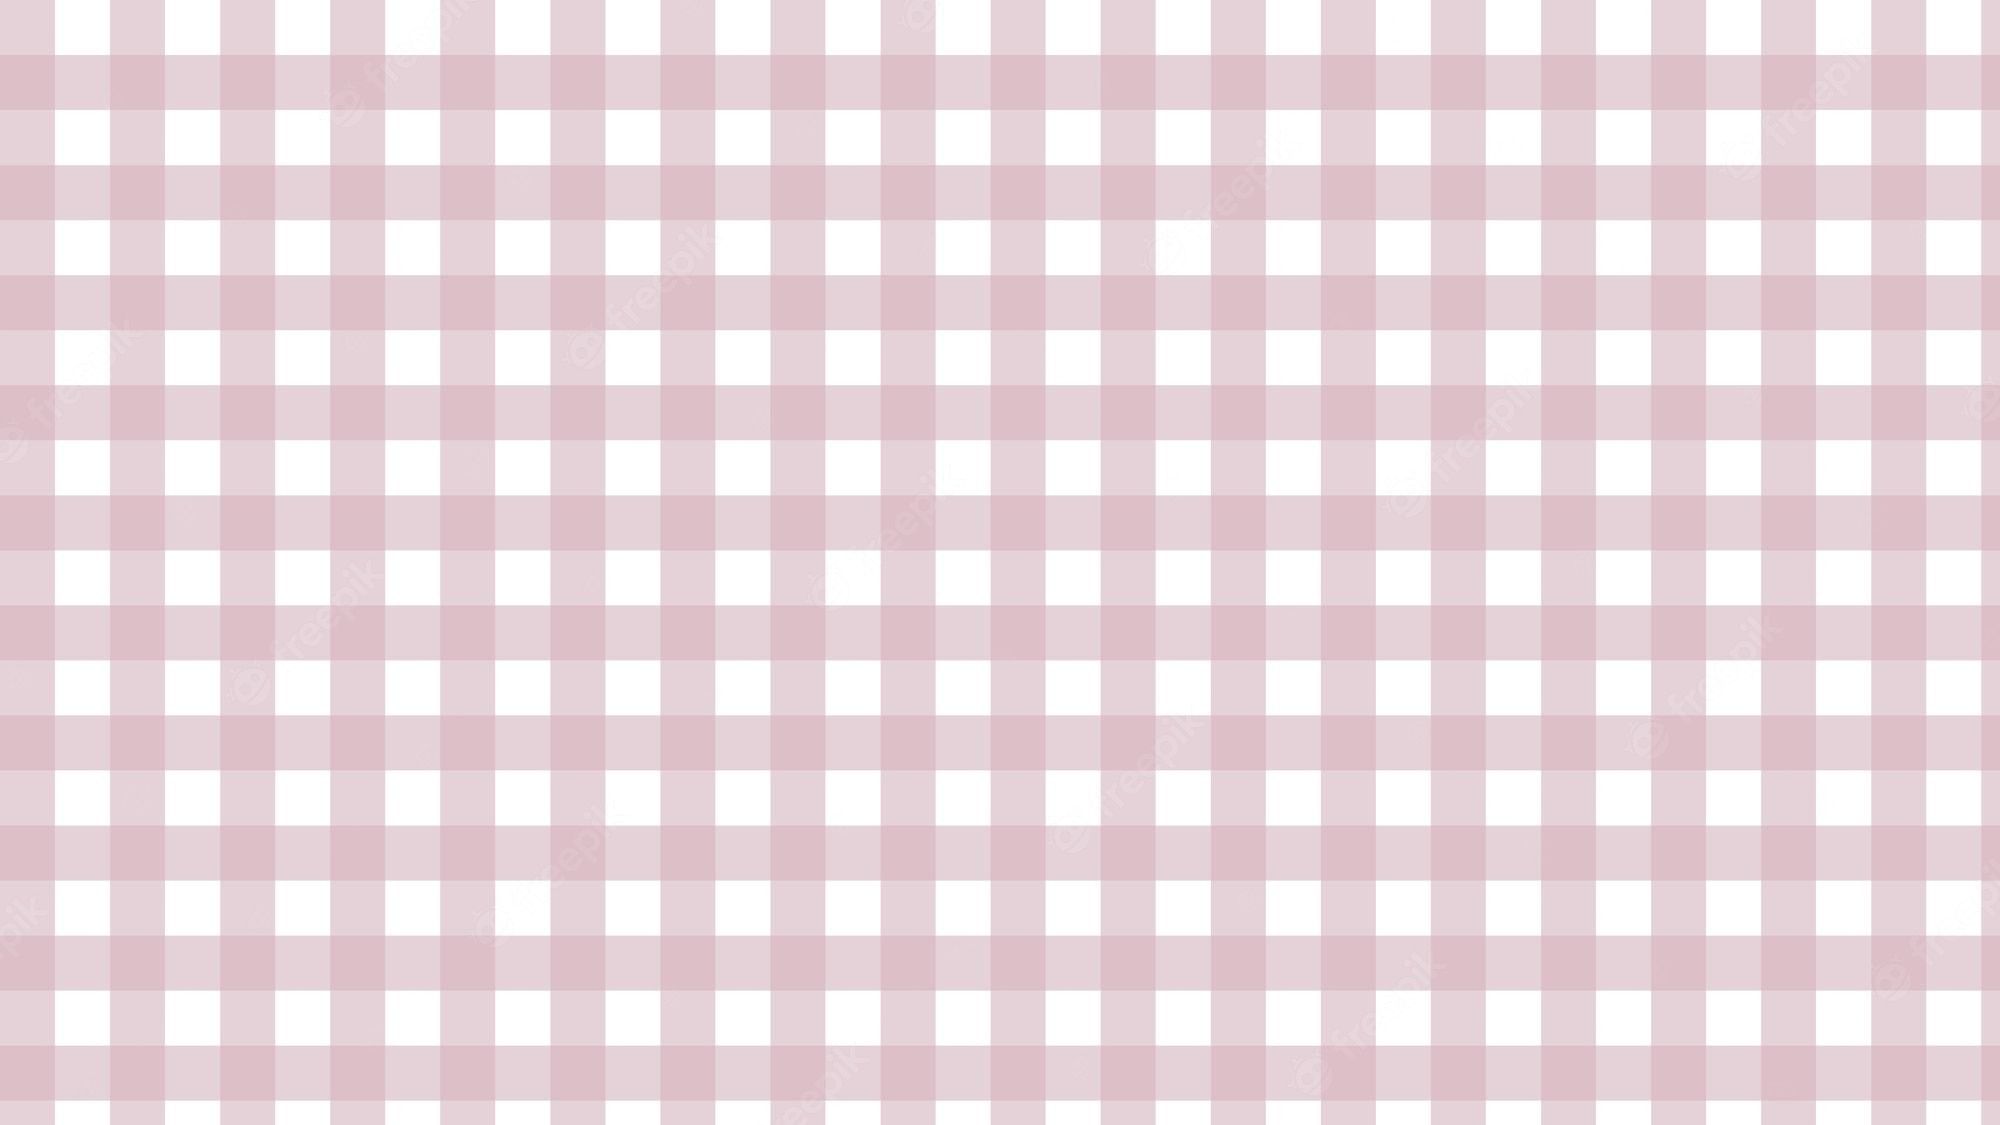 Premium Vector. Aesthetic cute pastel pink gingham checkerboard plaid tartan pattern background wallpaper